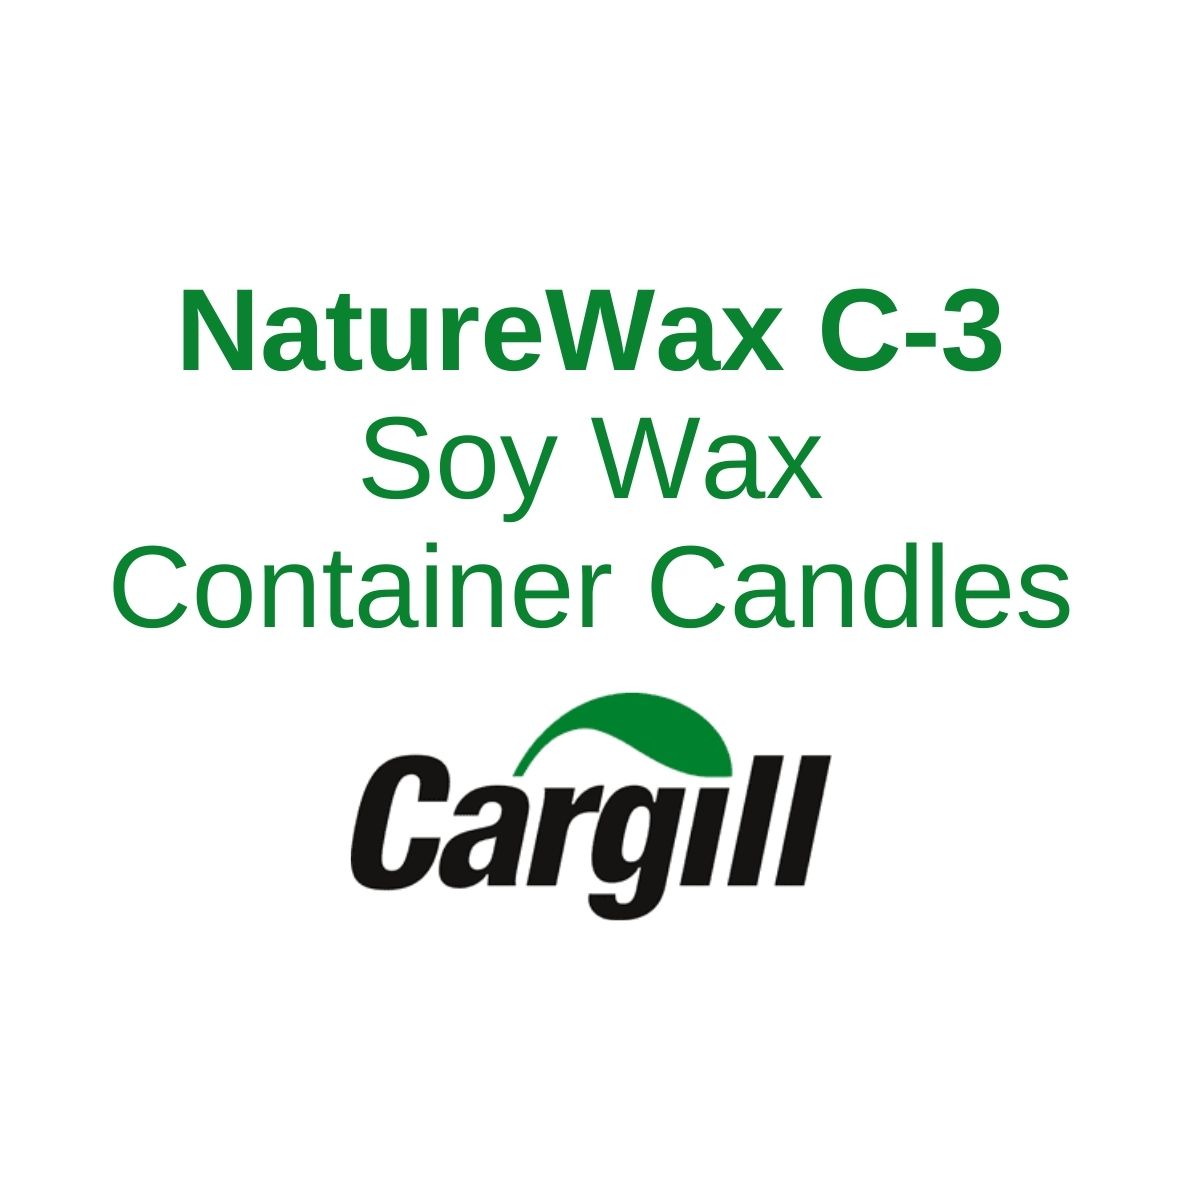 NatureWax C3 label by Cargill